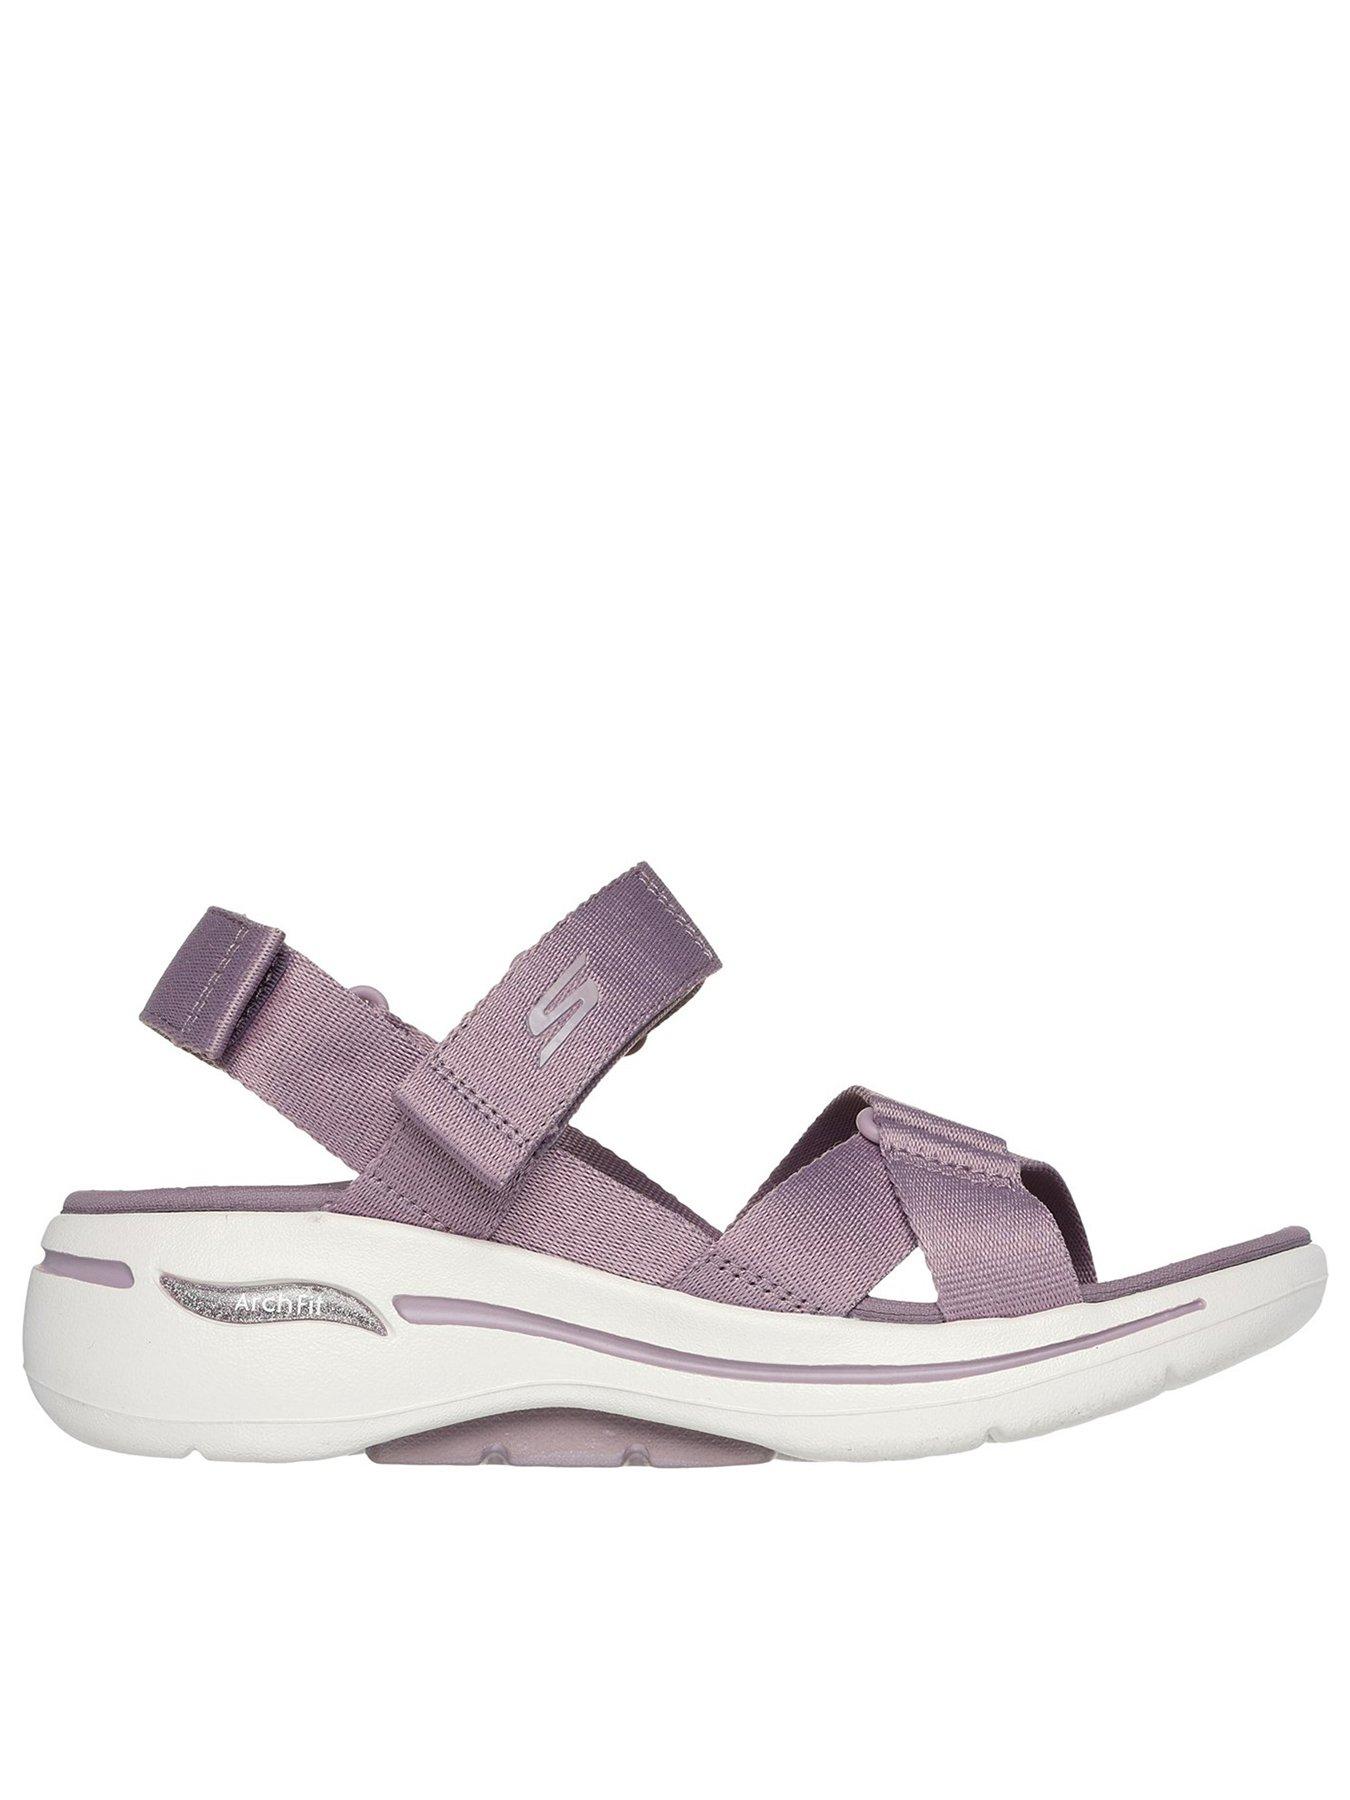 Skechers Go Walk Arch Fit Strappy Sandals - Lavender, Purple, Size 5, Women